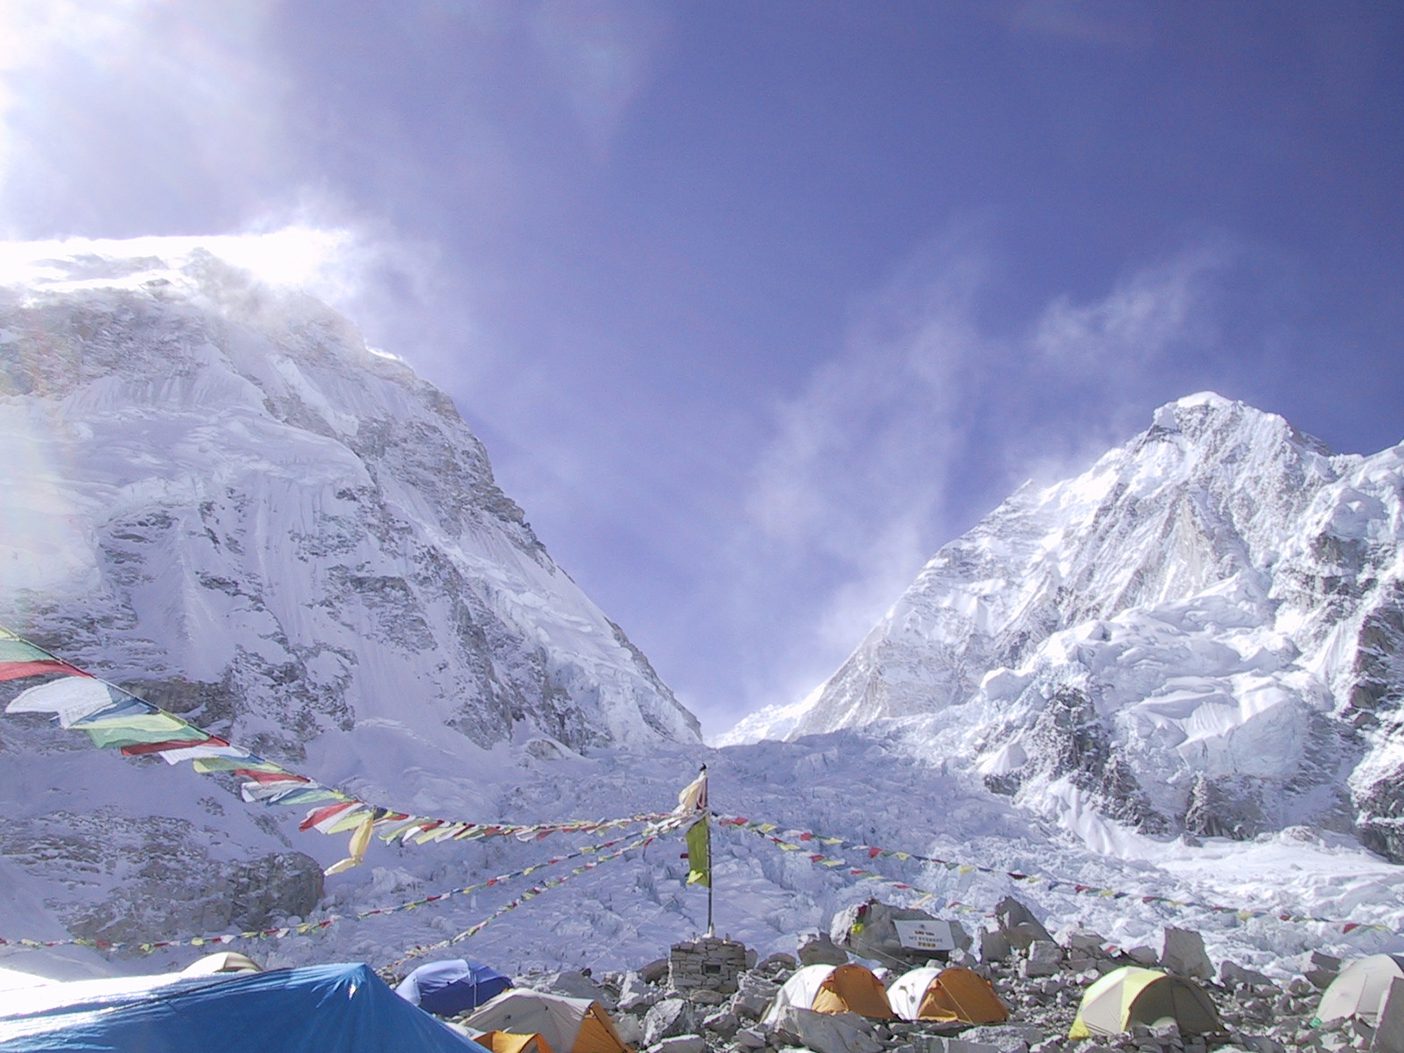 A base camp on Everest.